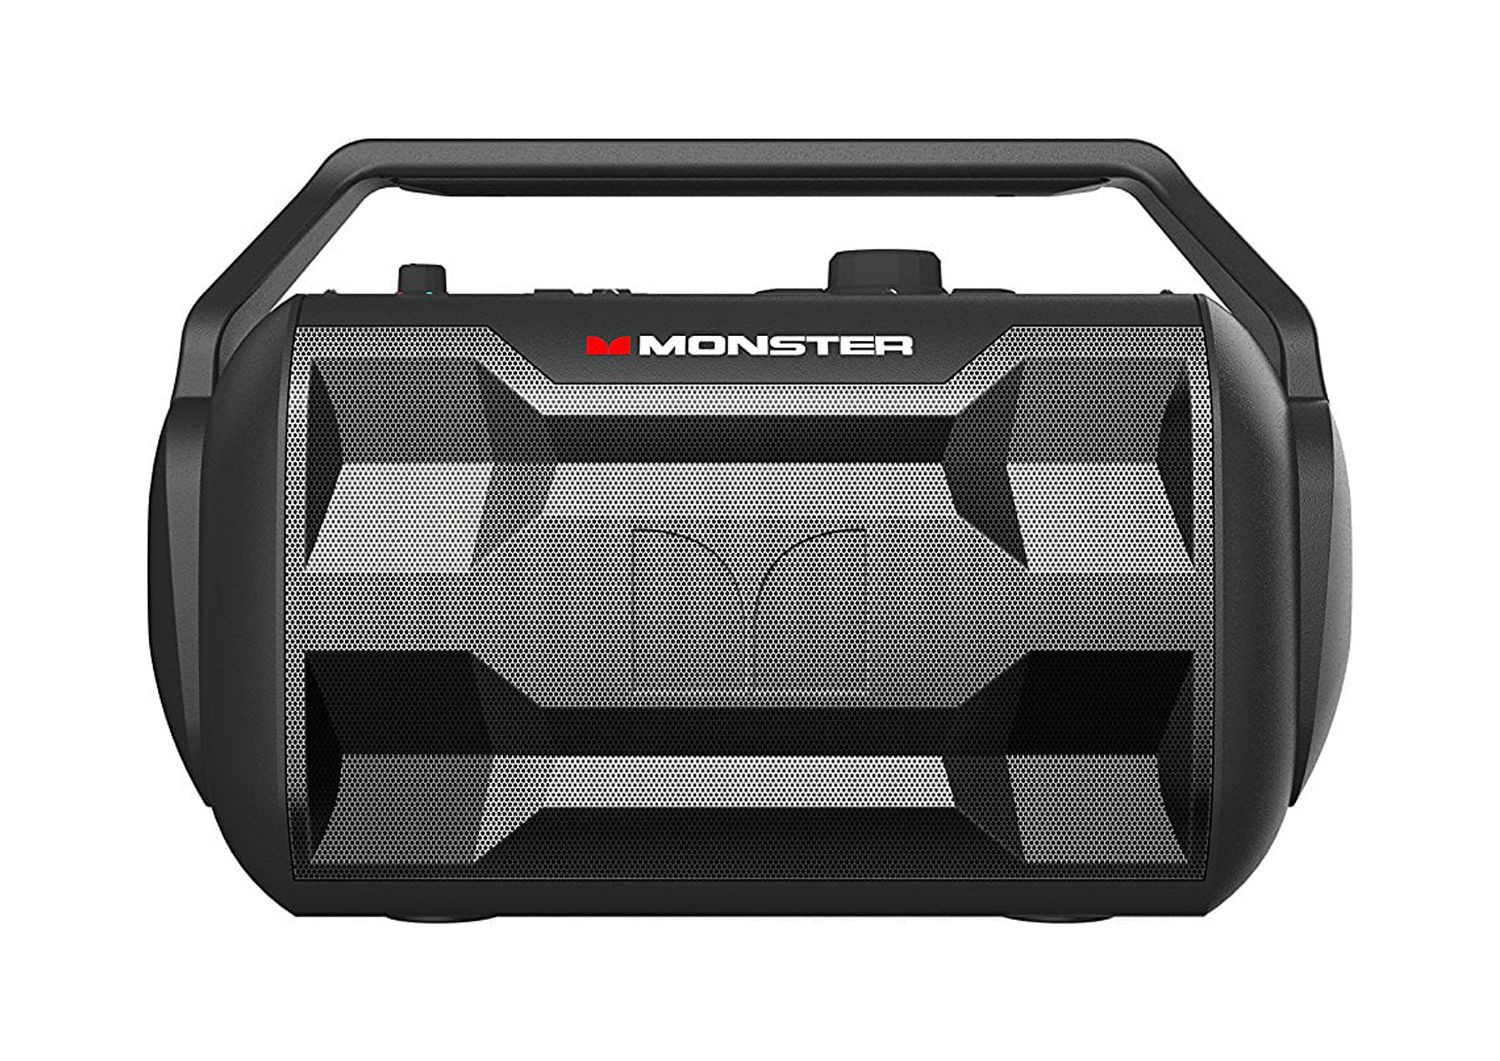 Monster NOMAD 30-Watt Bluetooth Speaker, NFC, indoor/outdoor weather resistant, USB port, and microphone included - image 1 of 2